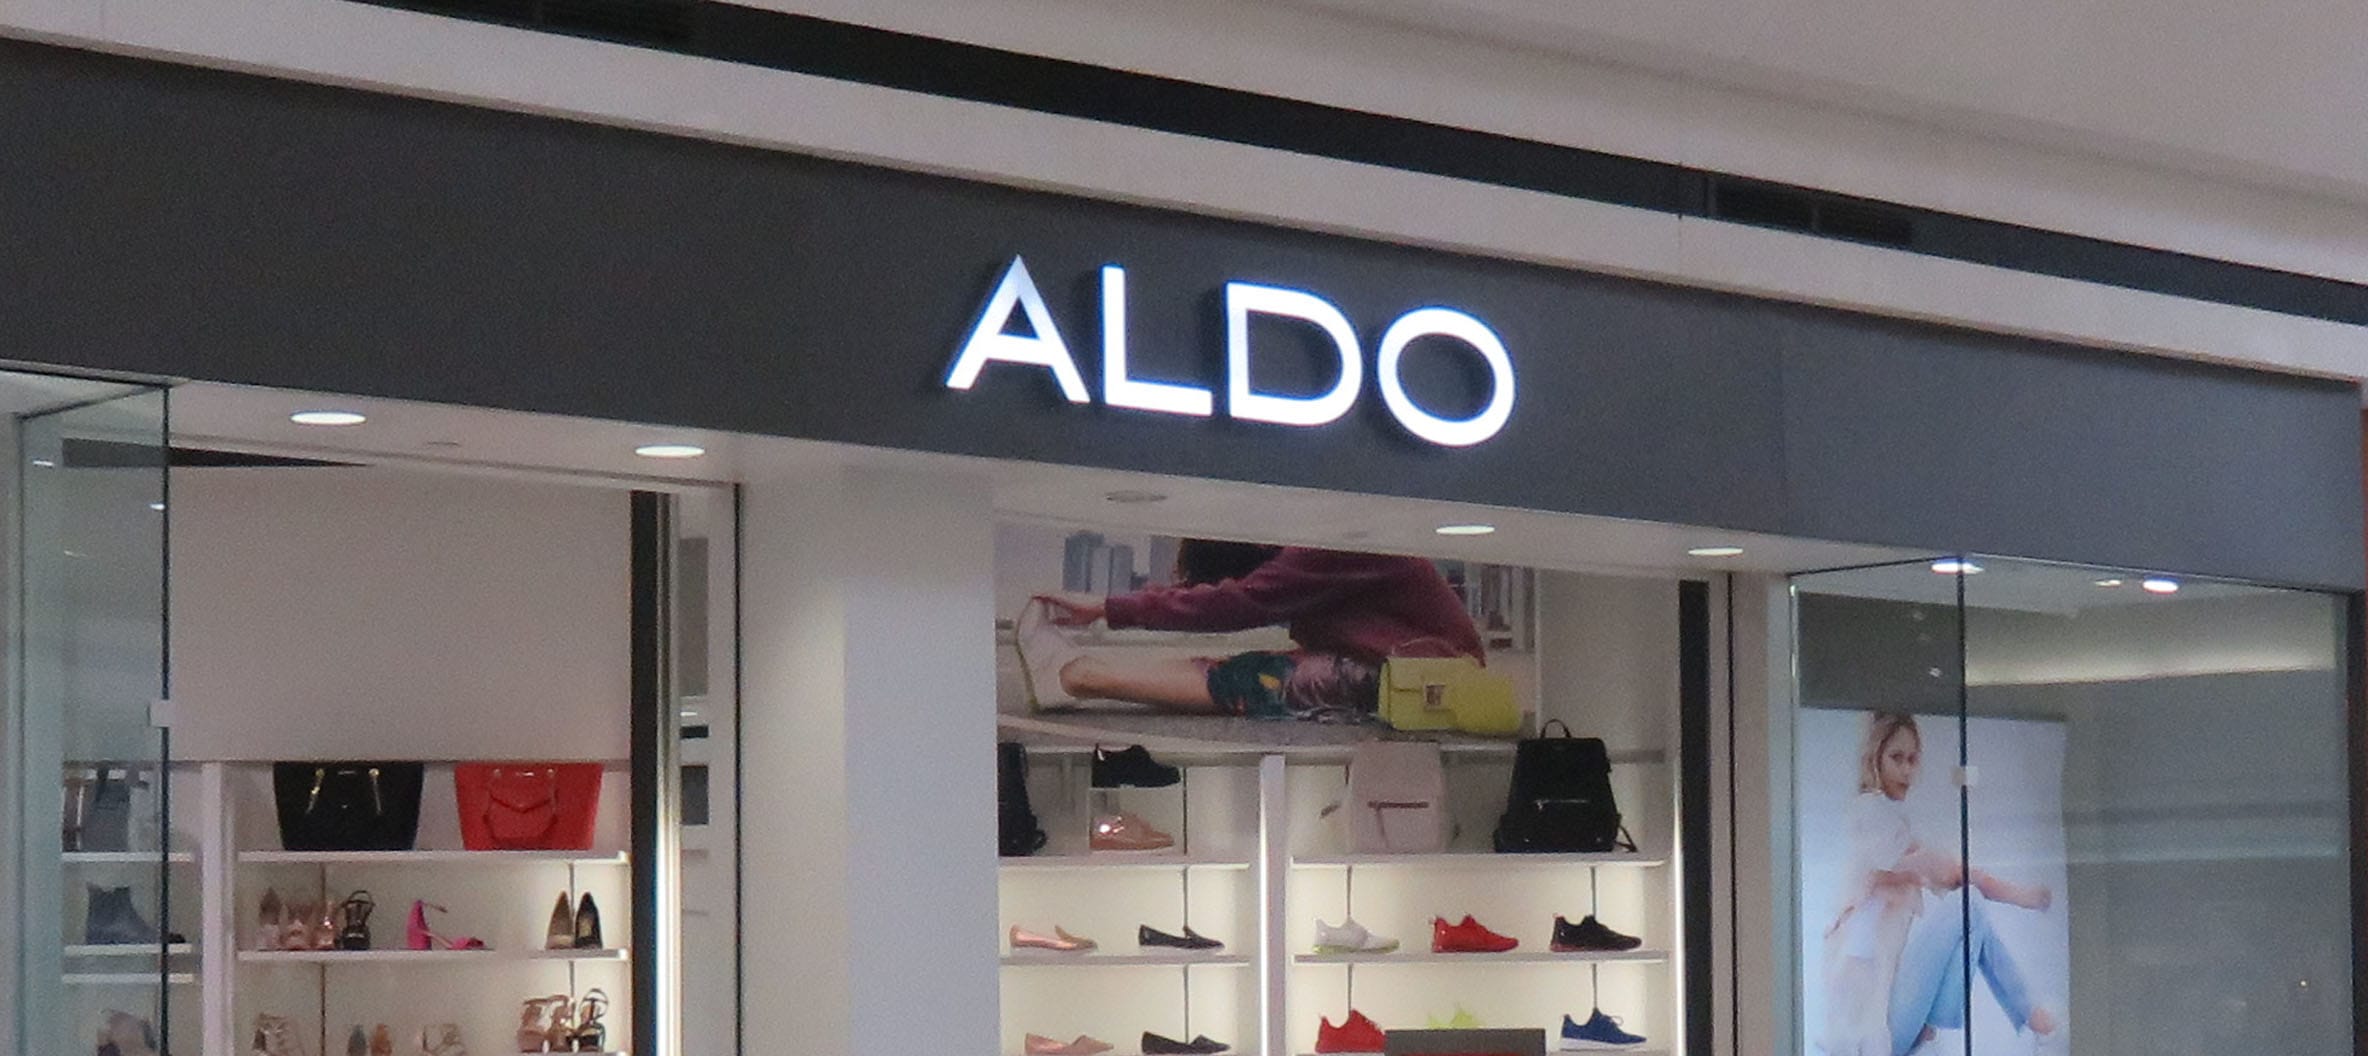 aldo shoe store near me